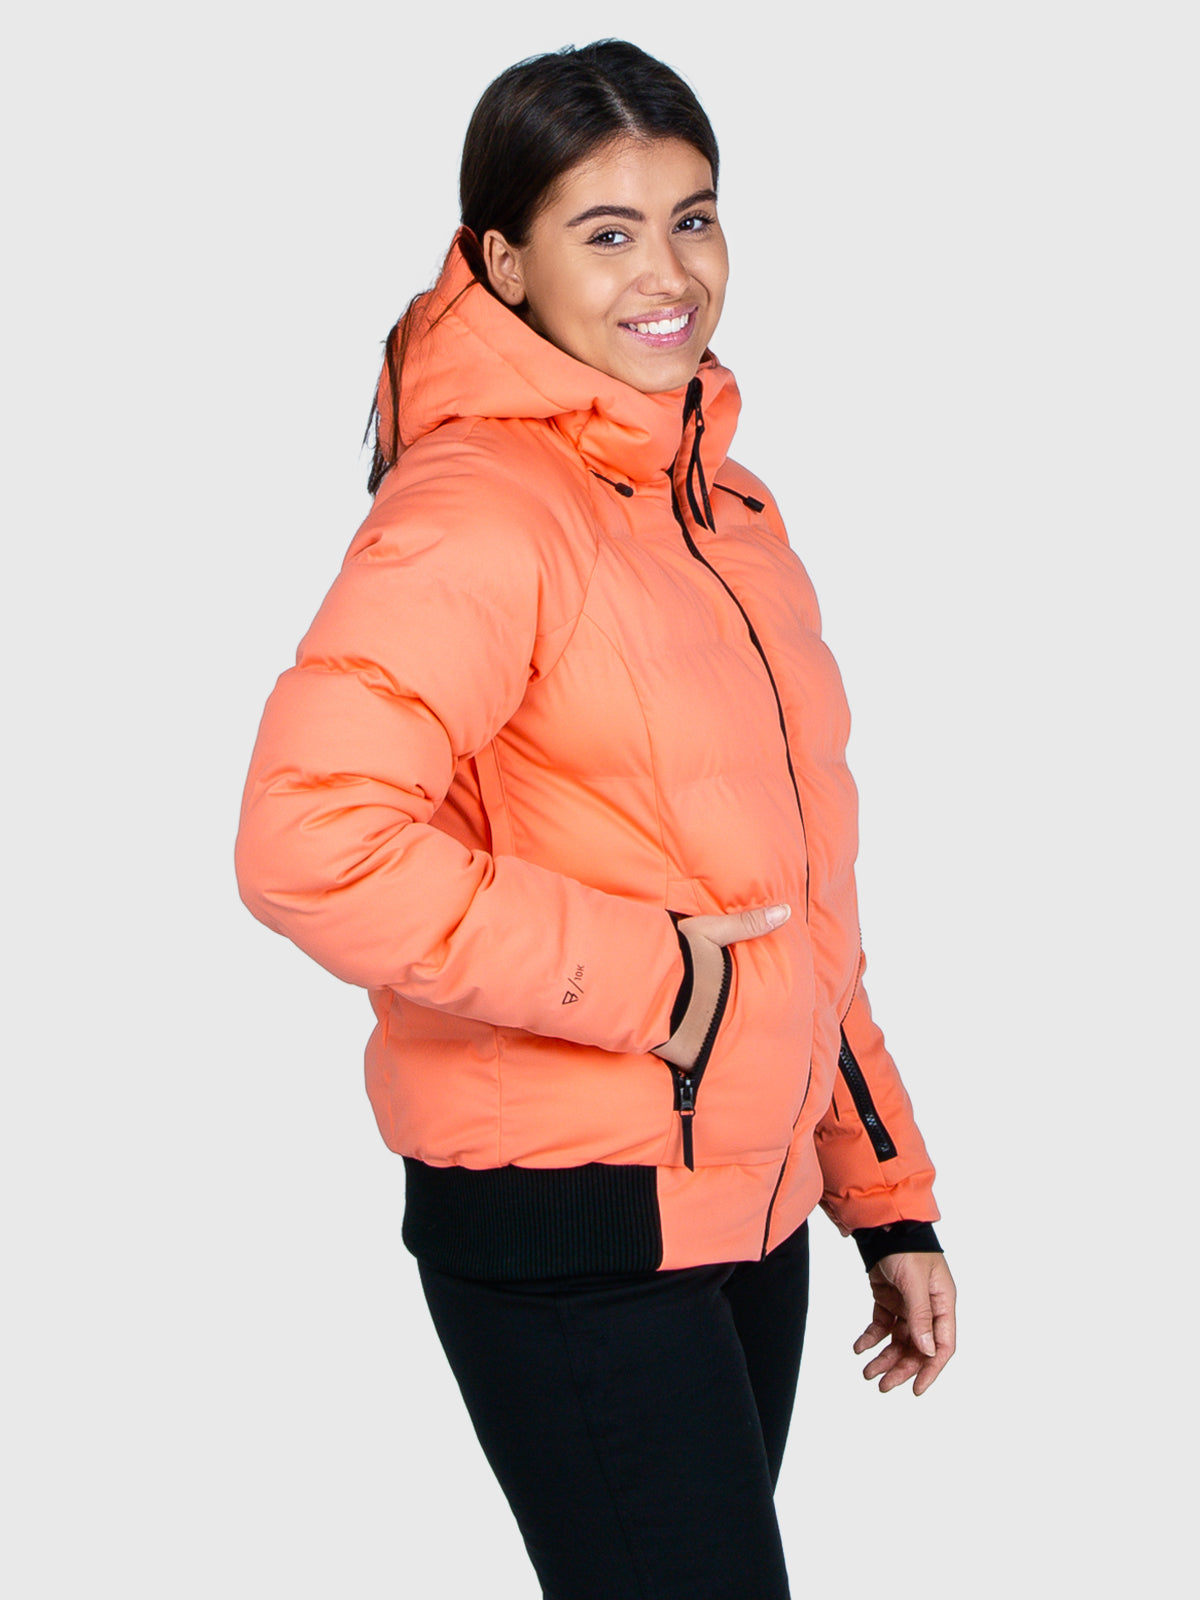 Firecrown Damen Skijacke| Orange